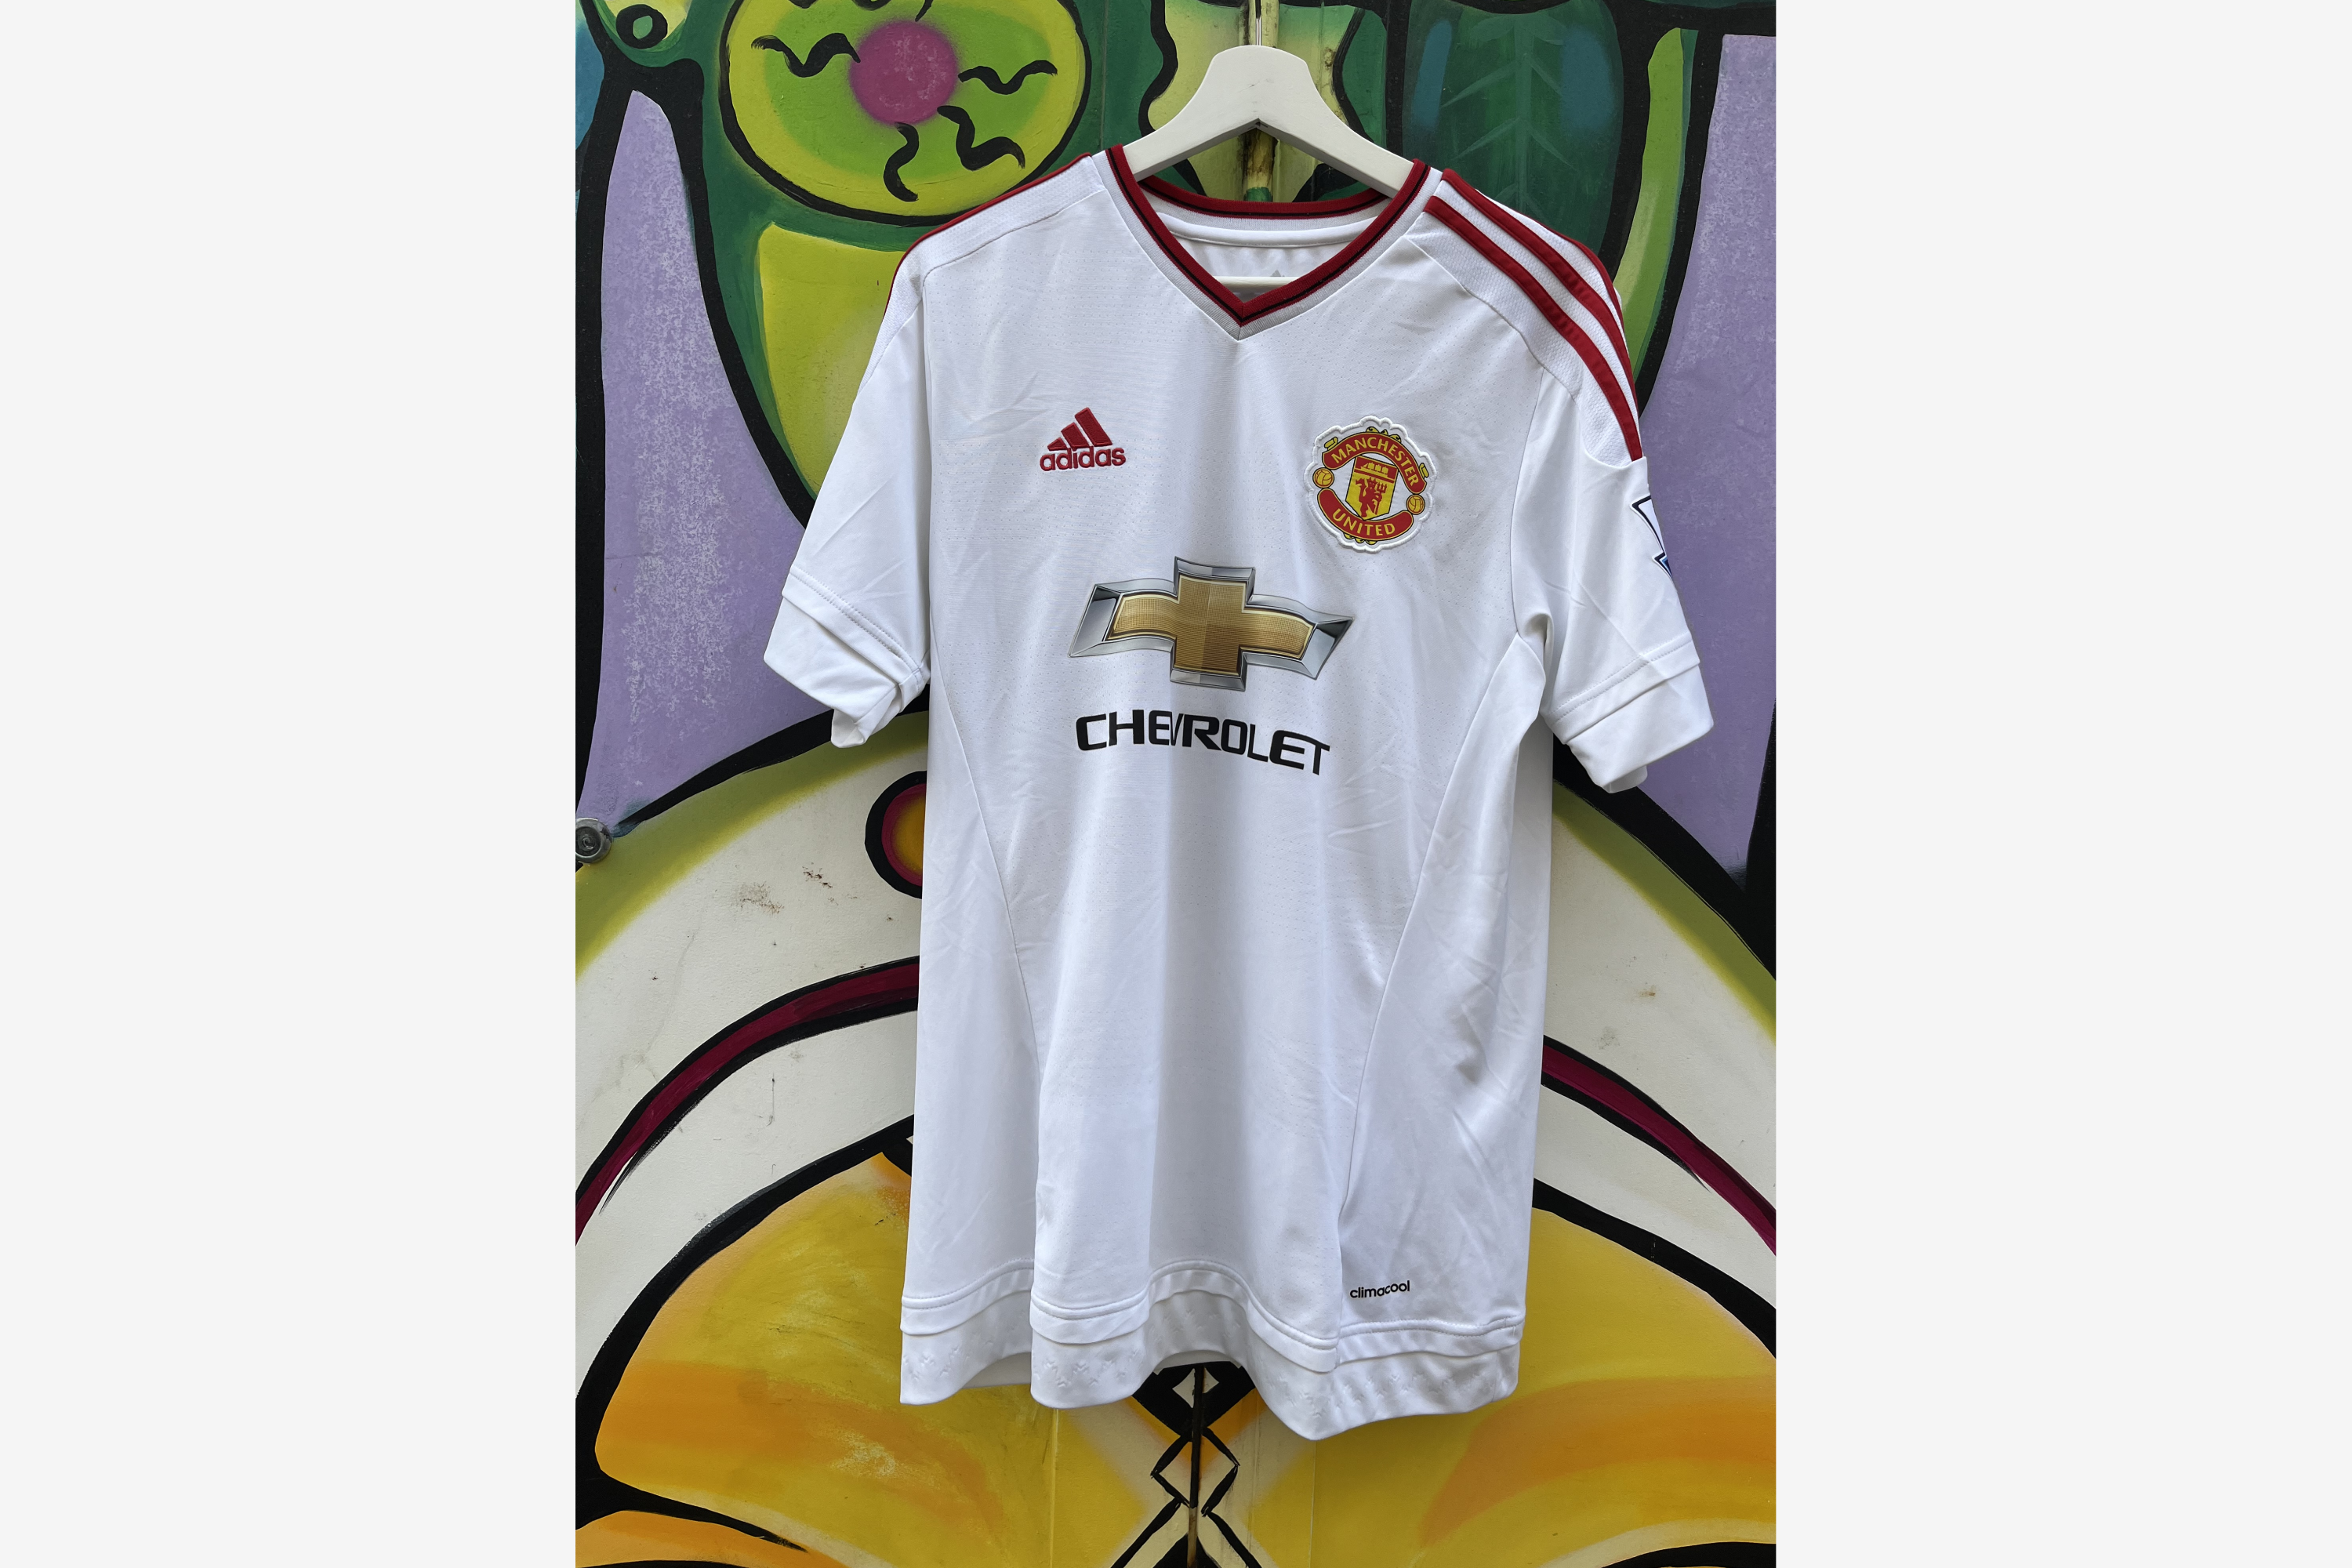 Adidas - Manchester United 2015/16 Away Football Shirt 'ANDER HERRERA' (Fan Edition)